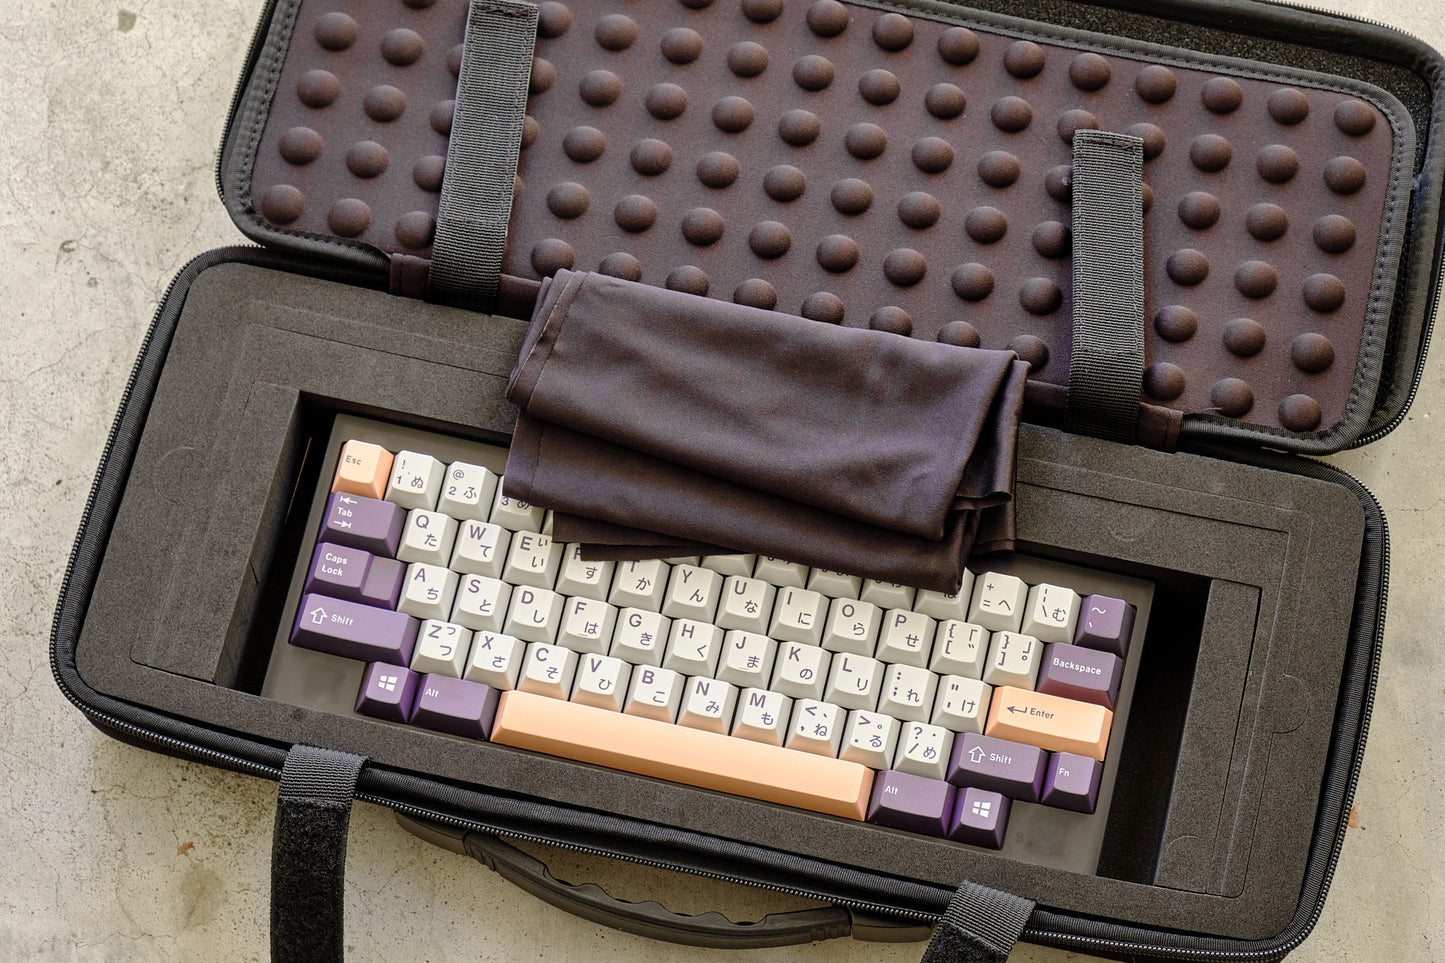 Keyboard Carrying Case